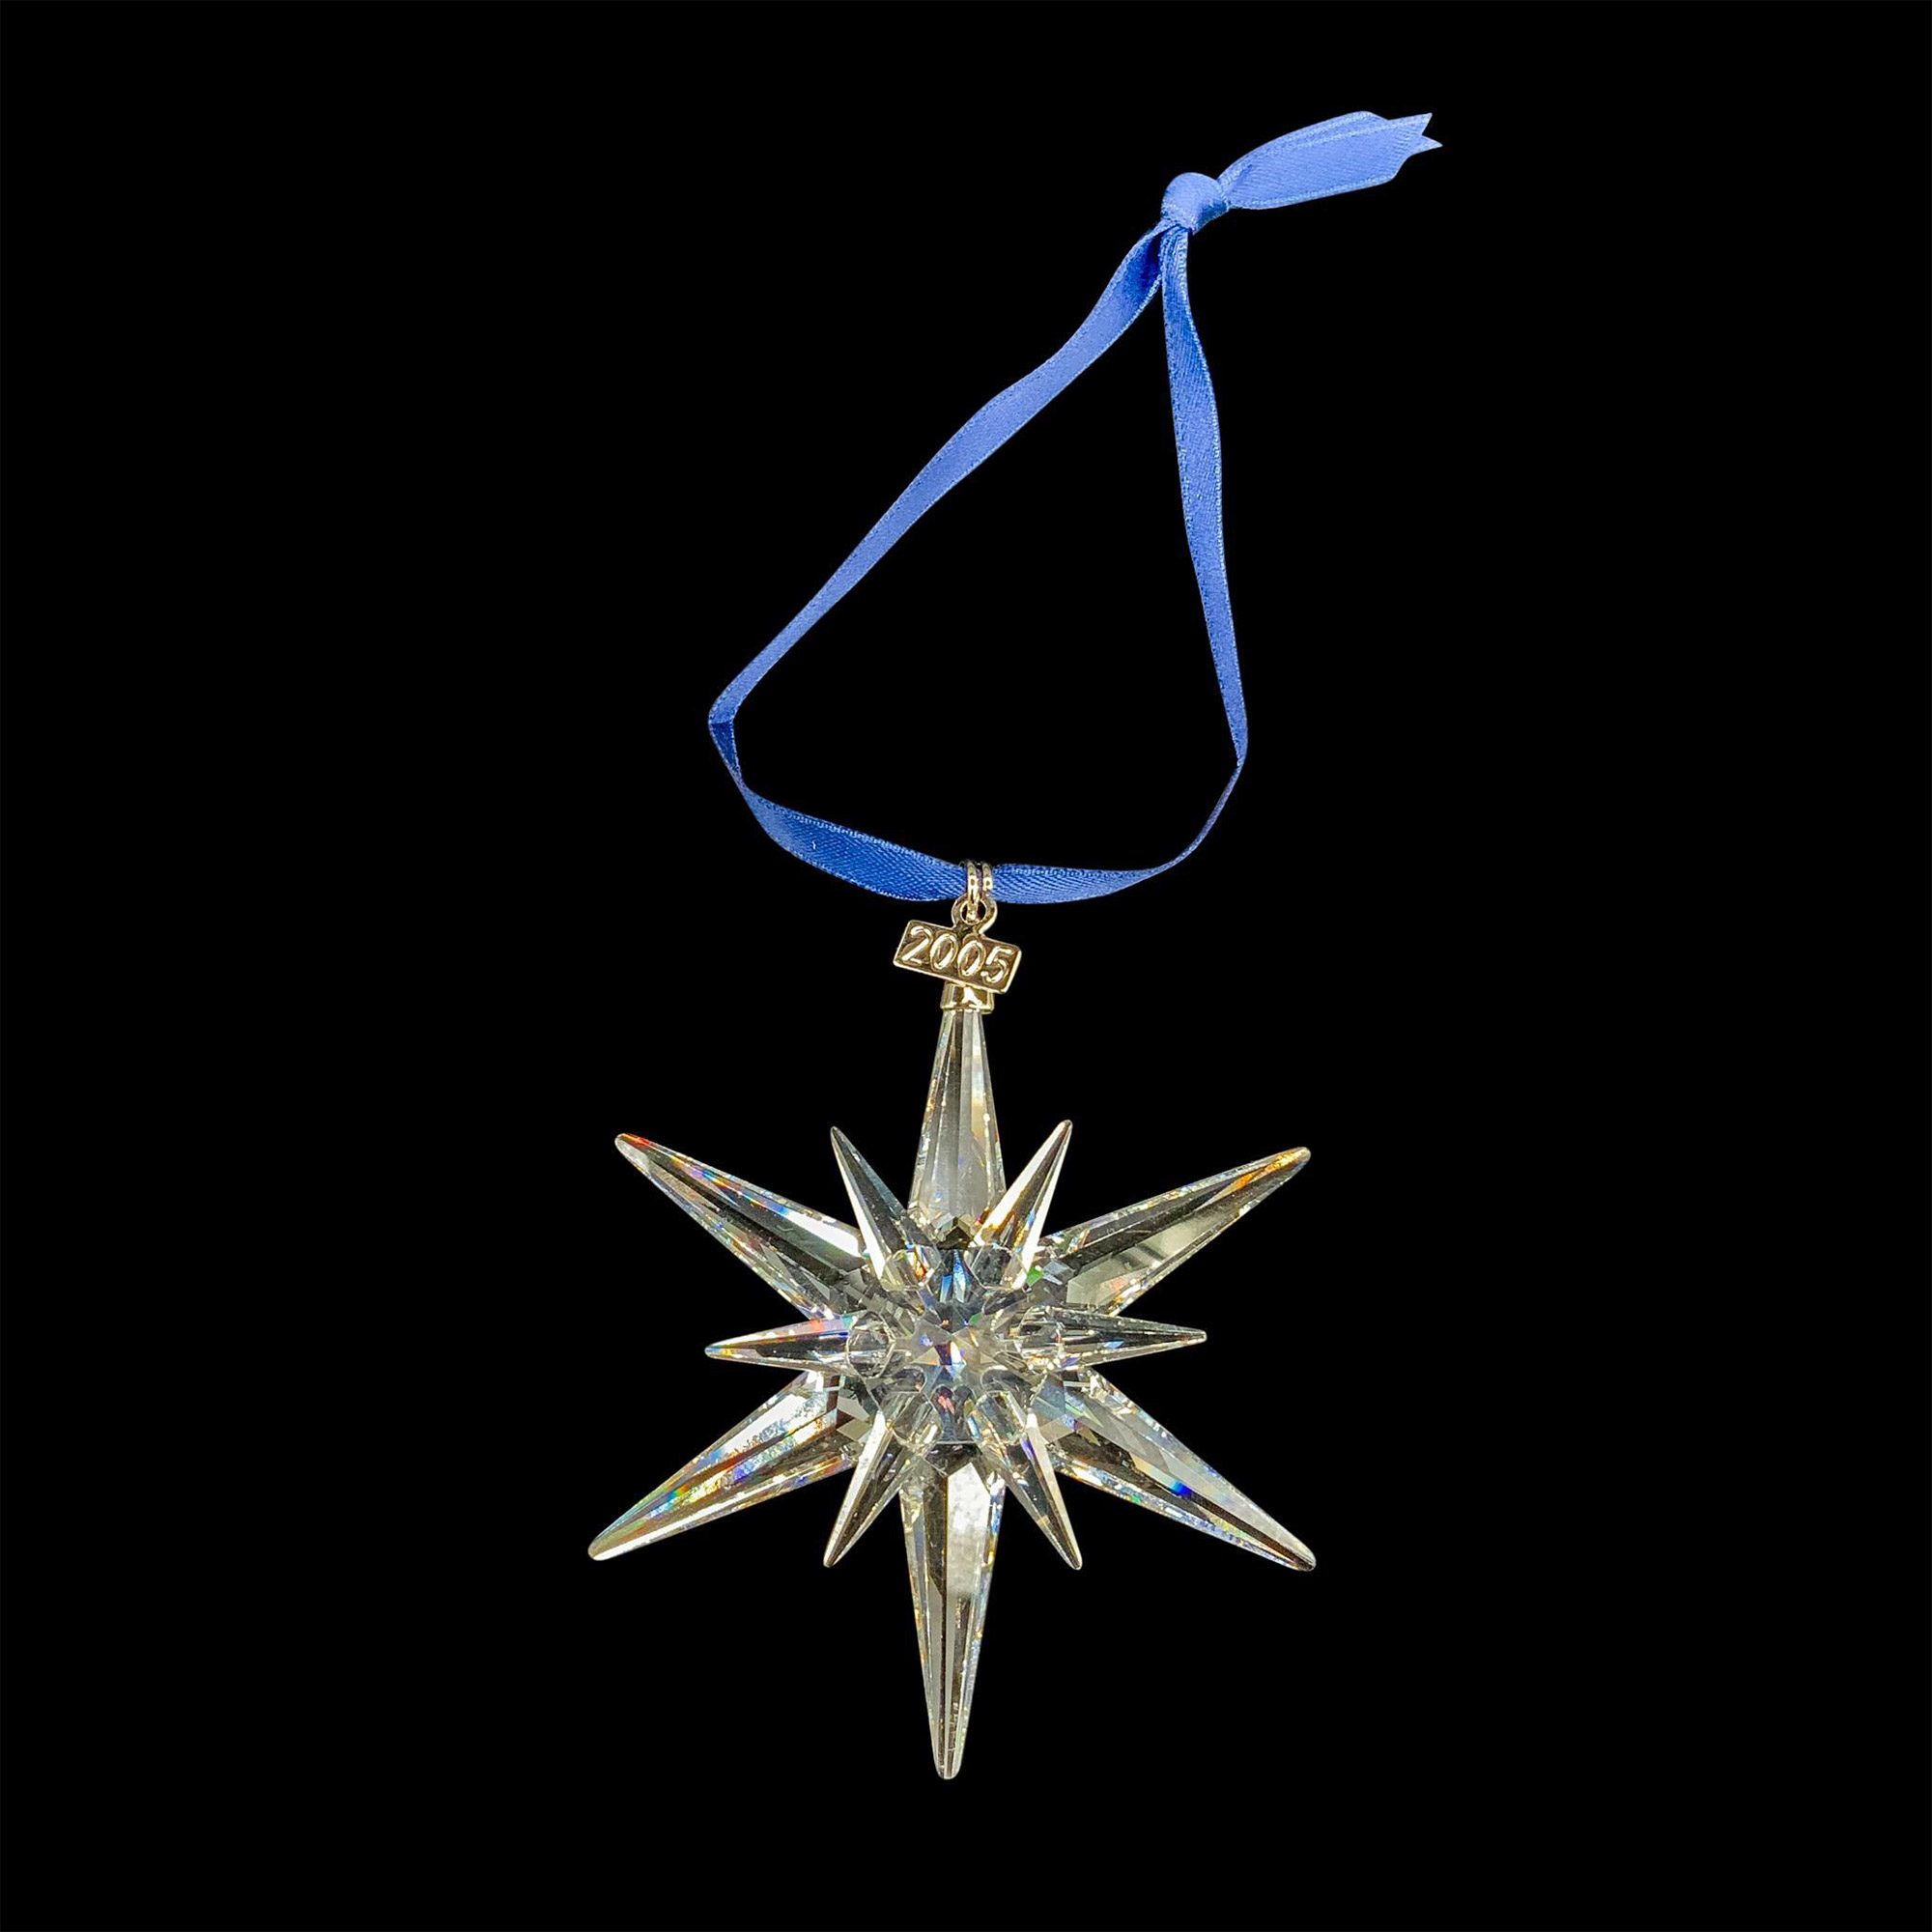 Swarovski Crystal Ornament, Rockefeller Center Star - Image 2 of 3